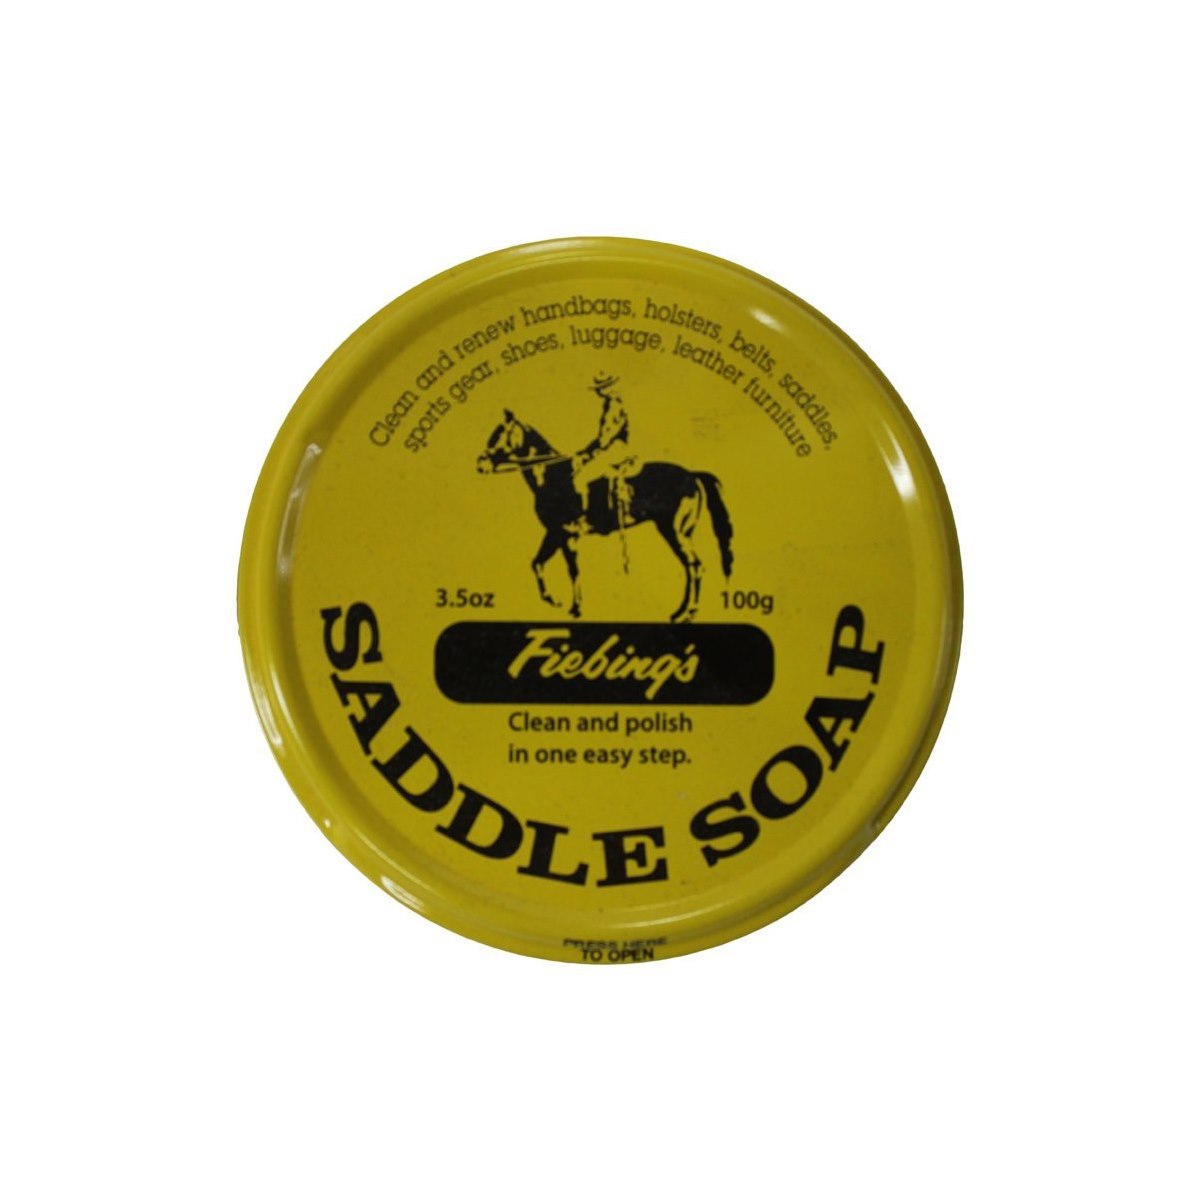 Fiebings Saddle Soap Yellow 100g